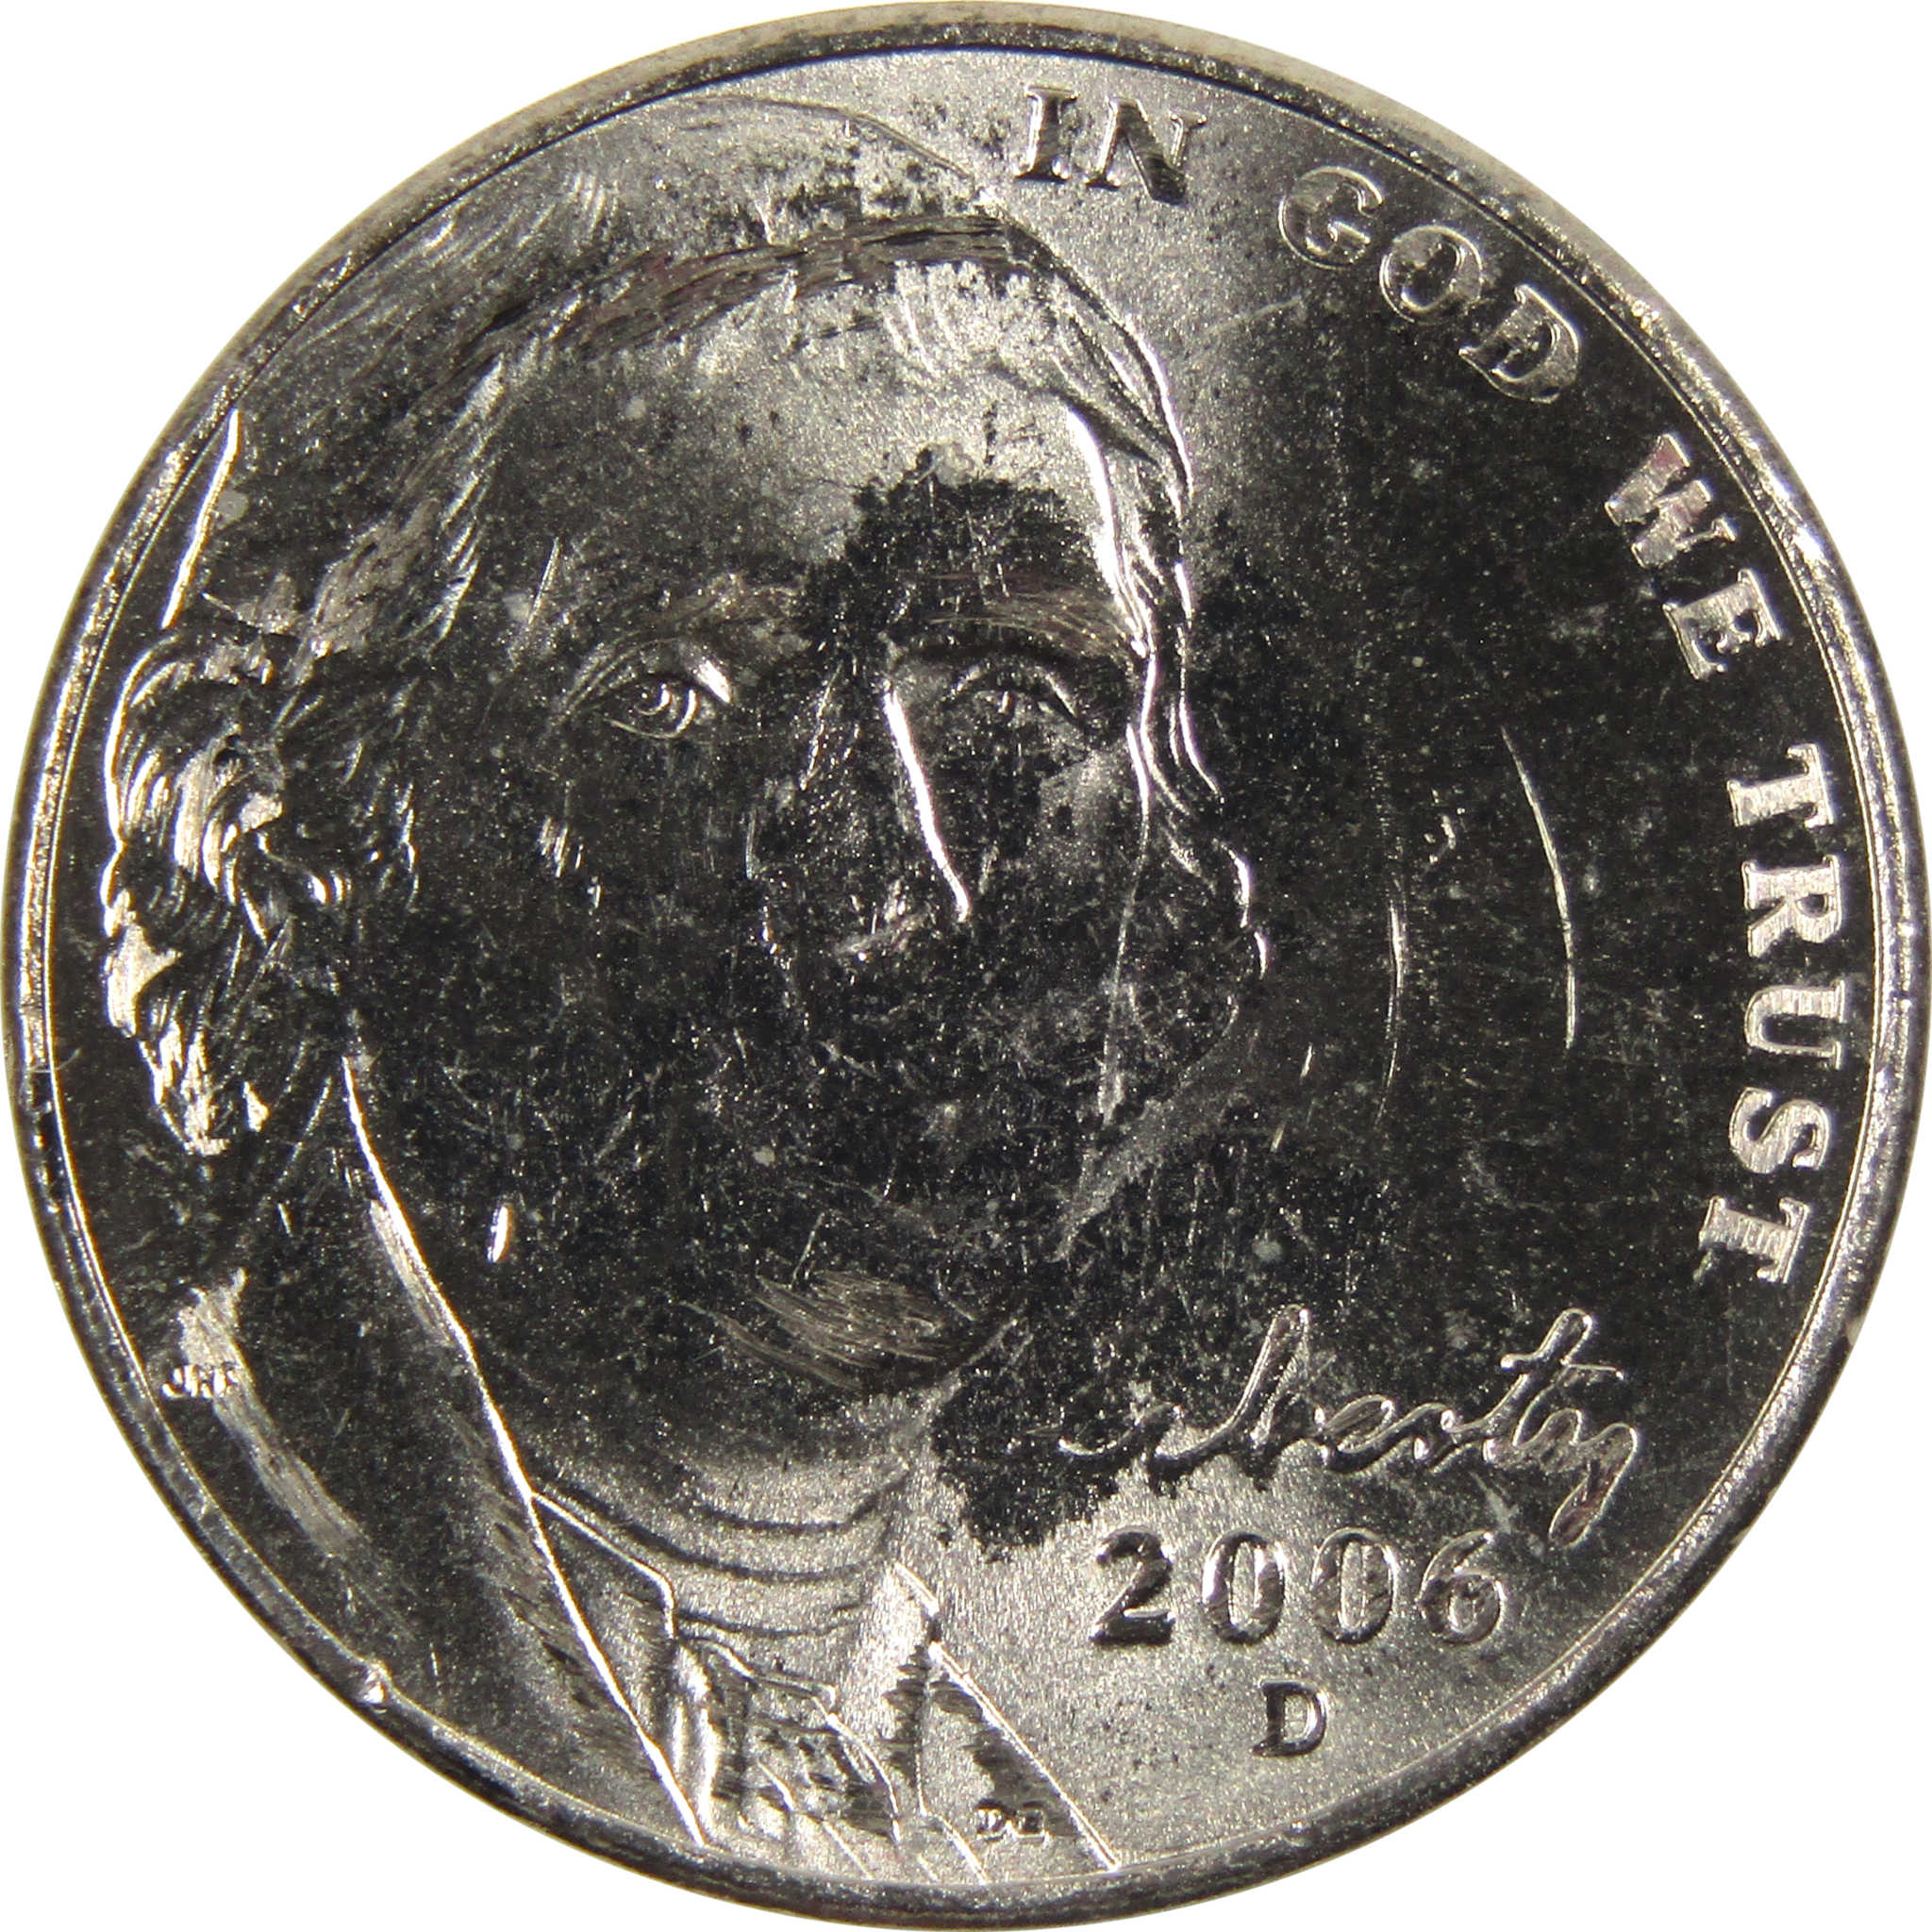 2006 D Jefferson Nickel BU Uncirculated 5c Coin